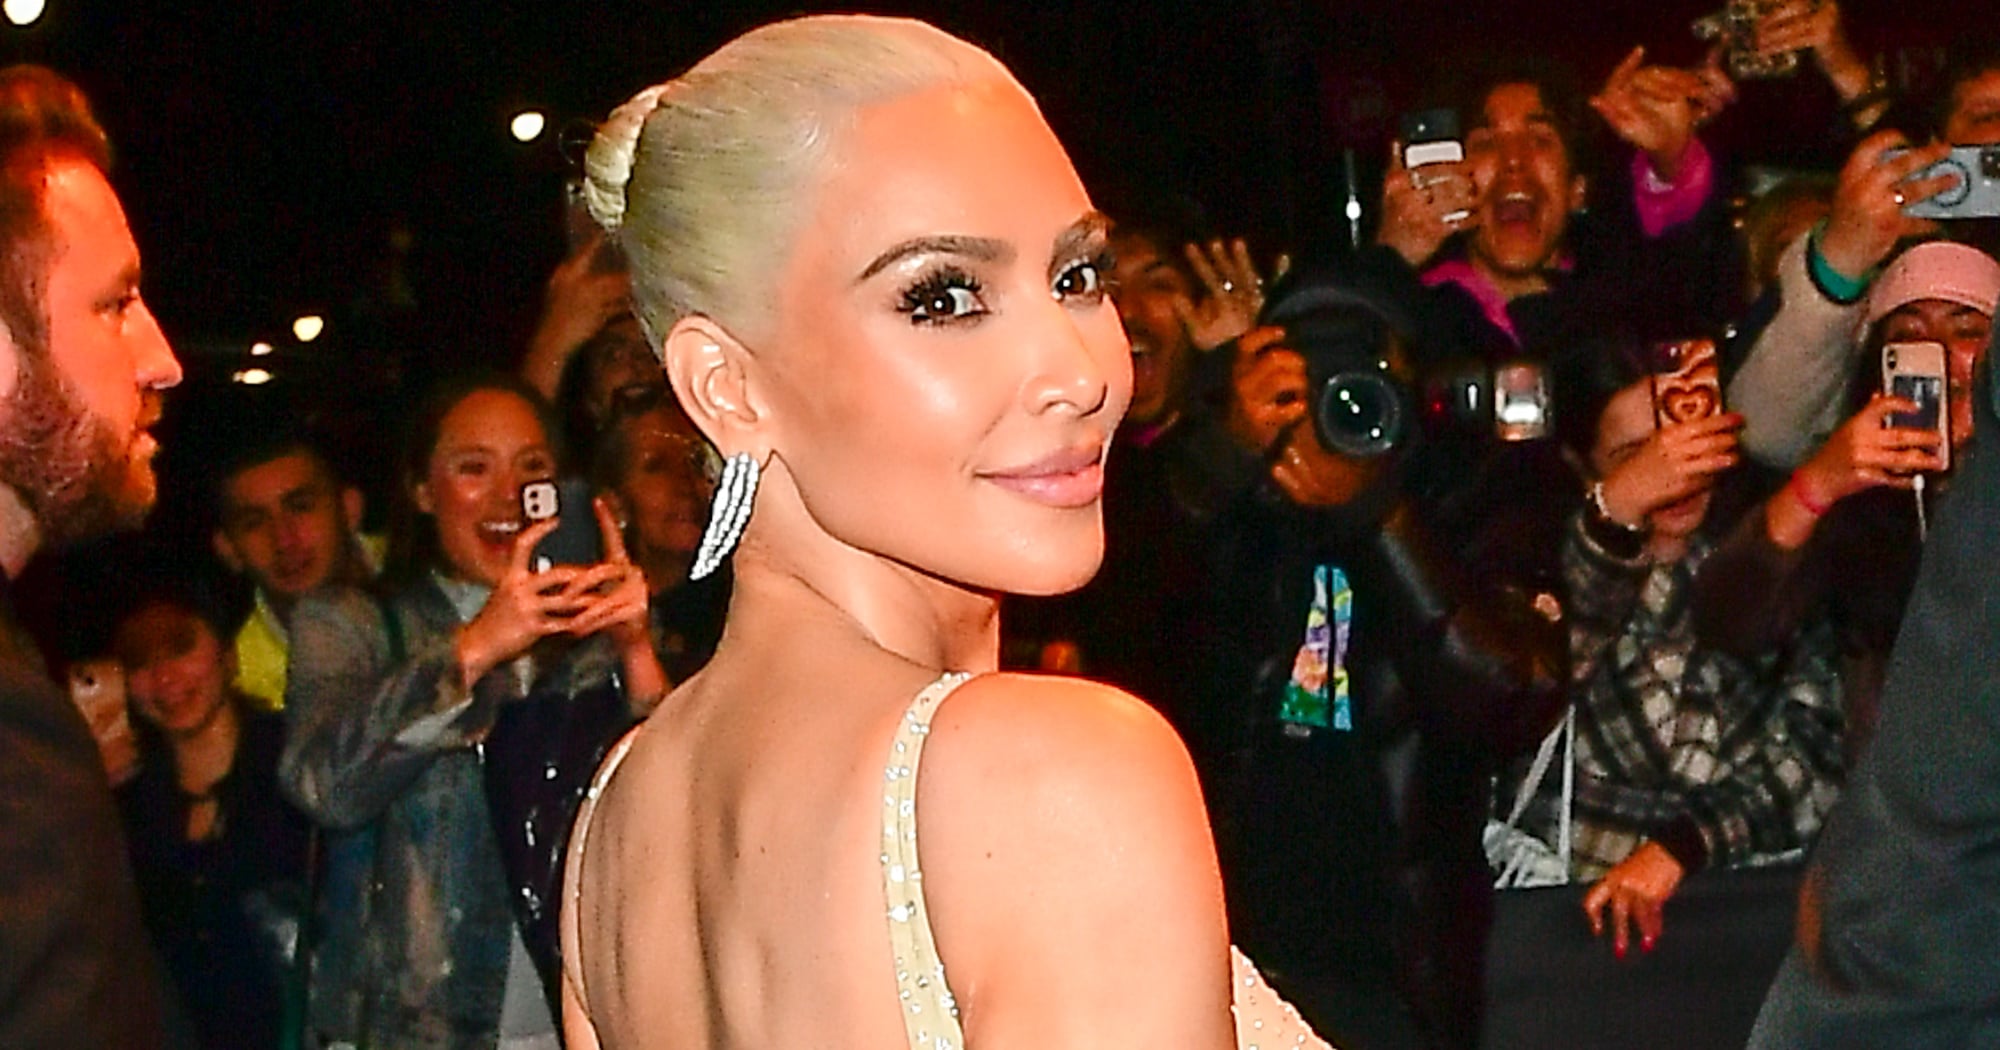 Kim Kardashian channels Carmen Electra in backless cutout dress